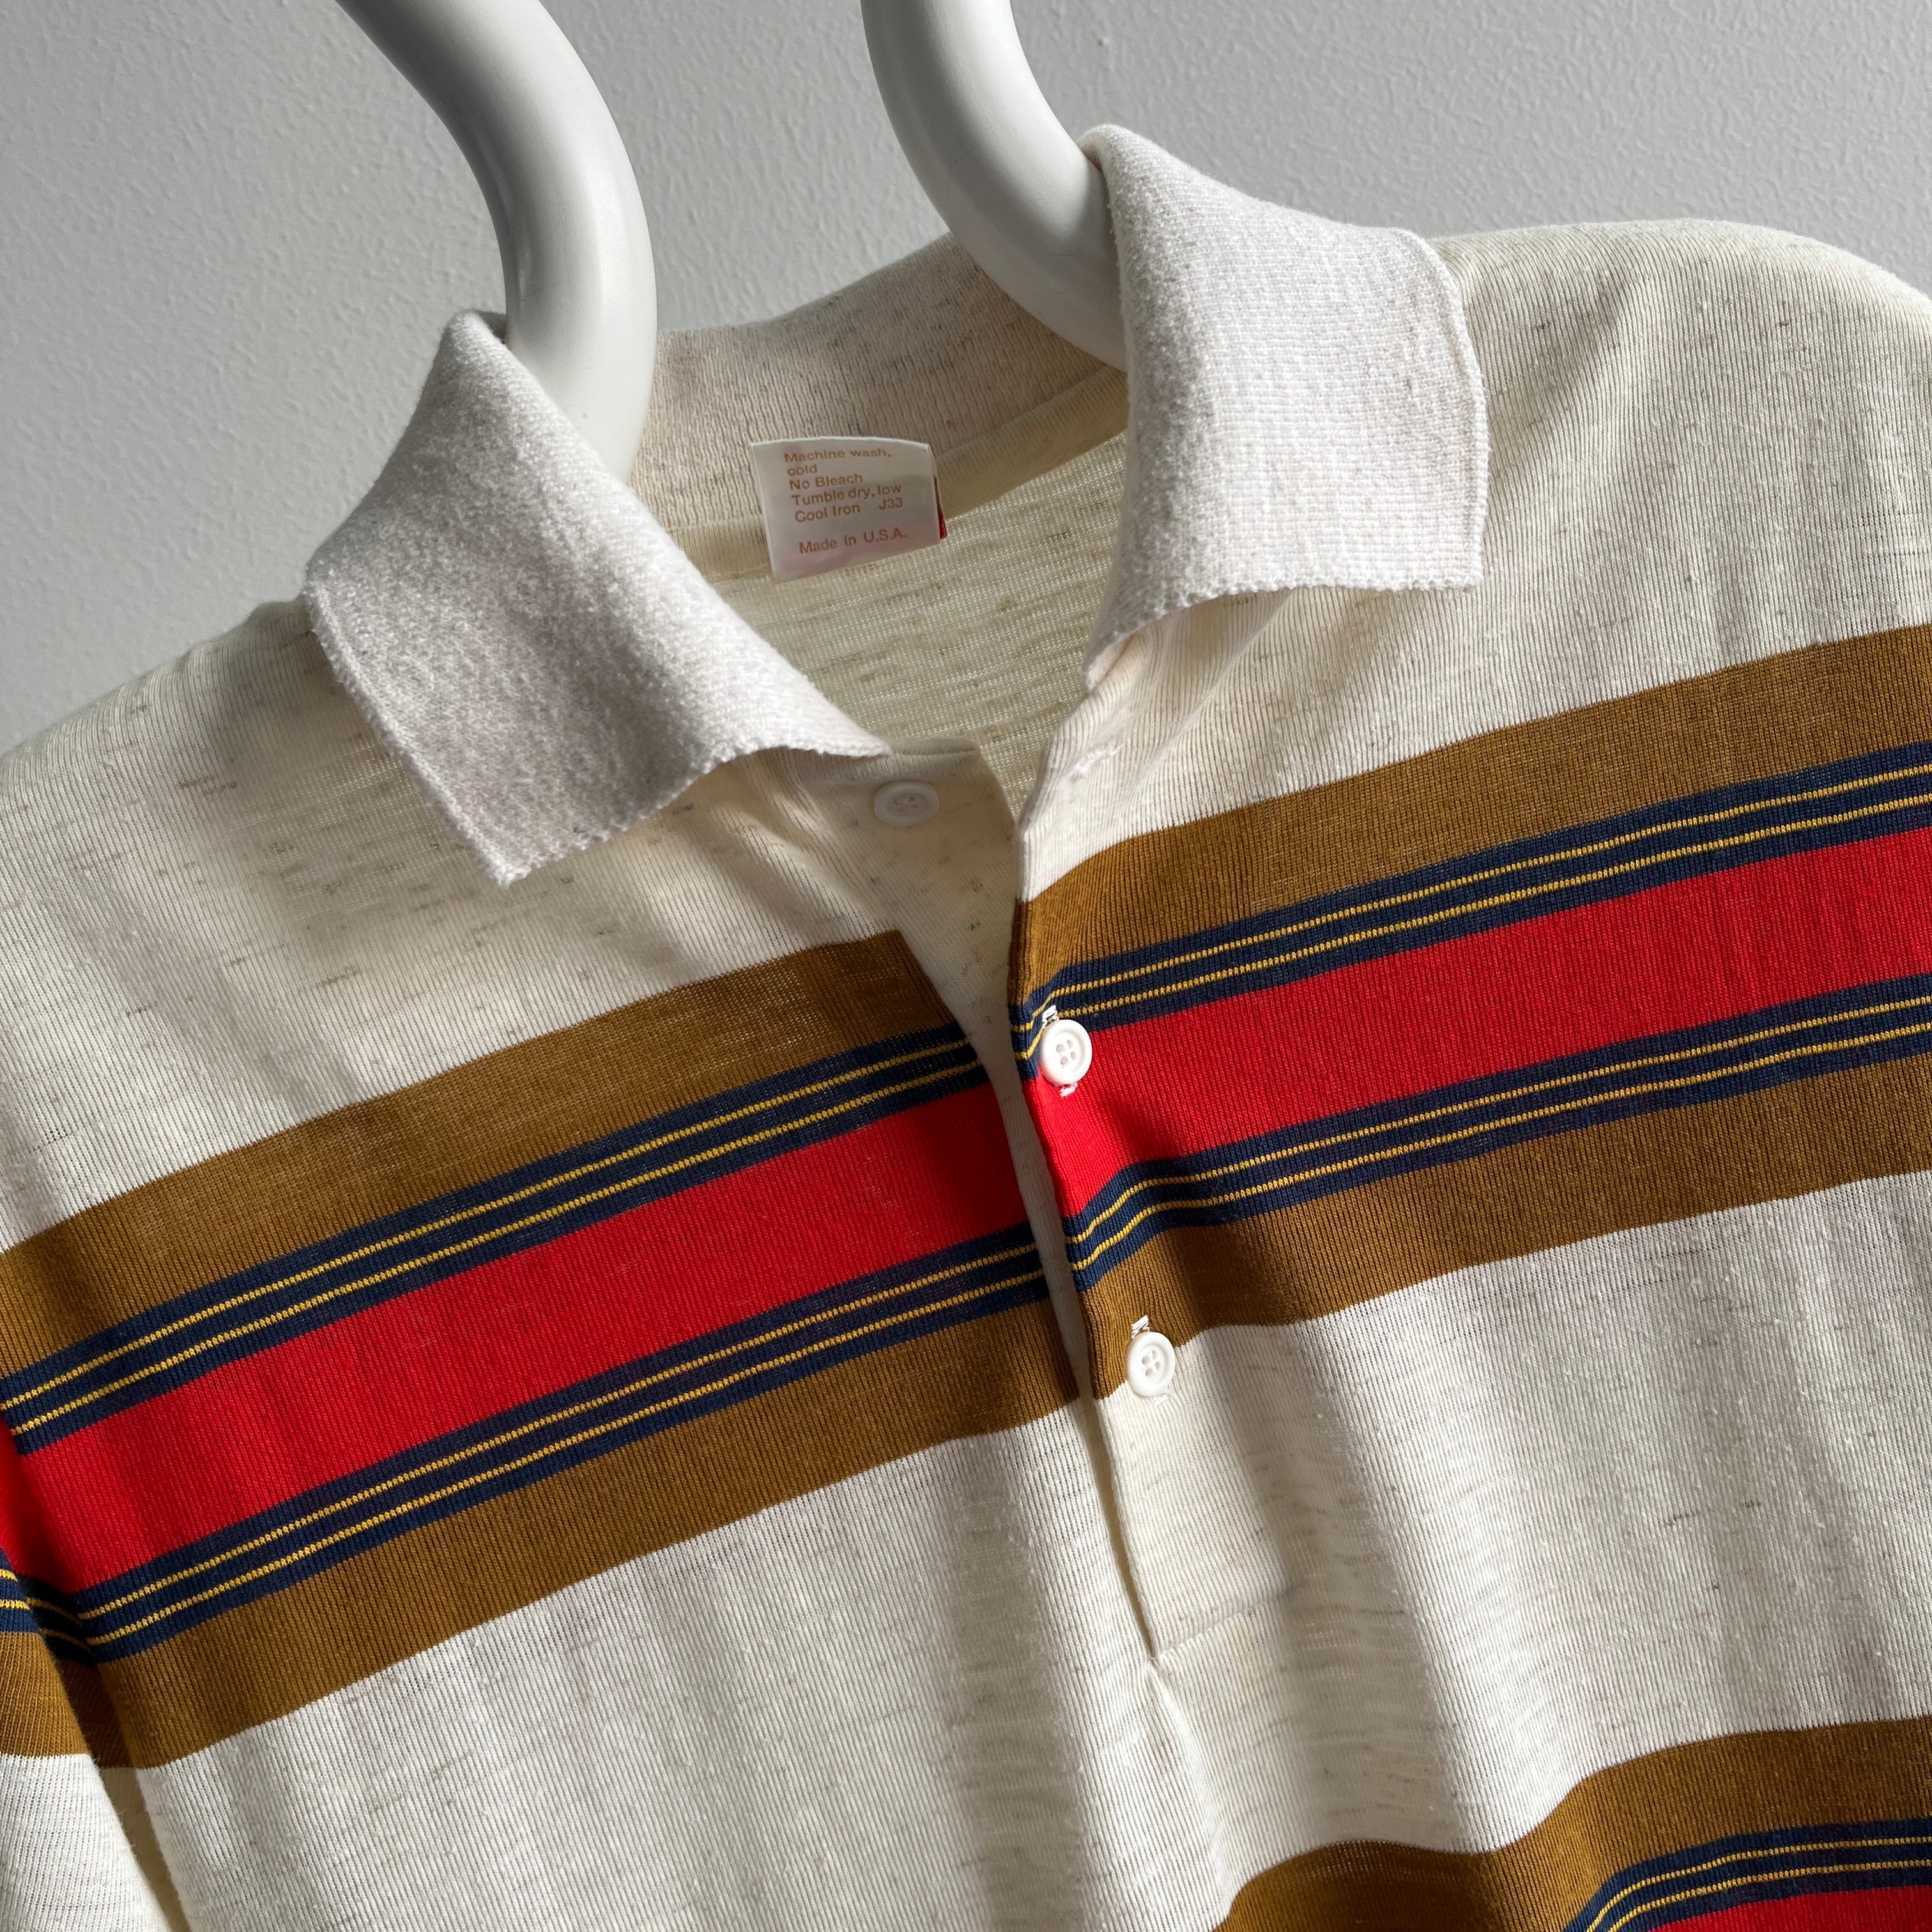 1980s Striped Polo Shirt - WOW